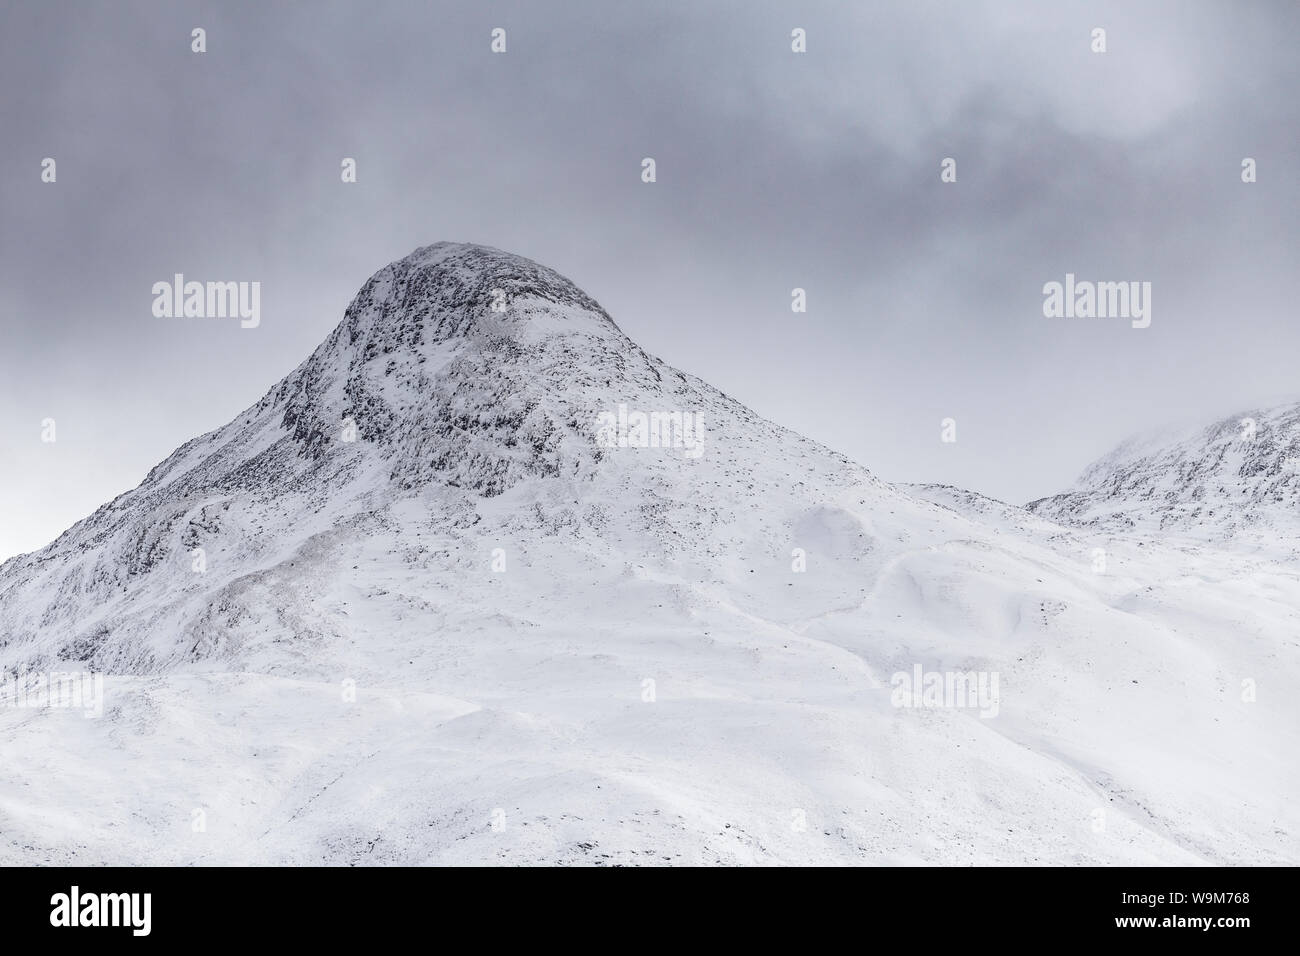 The pap of Glencoe covered in heavy snowfall, Scottish Highlands, UK. Stock Photo